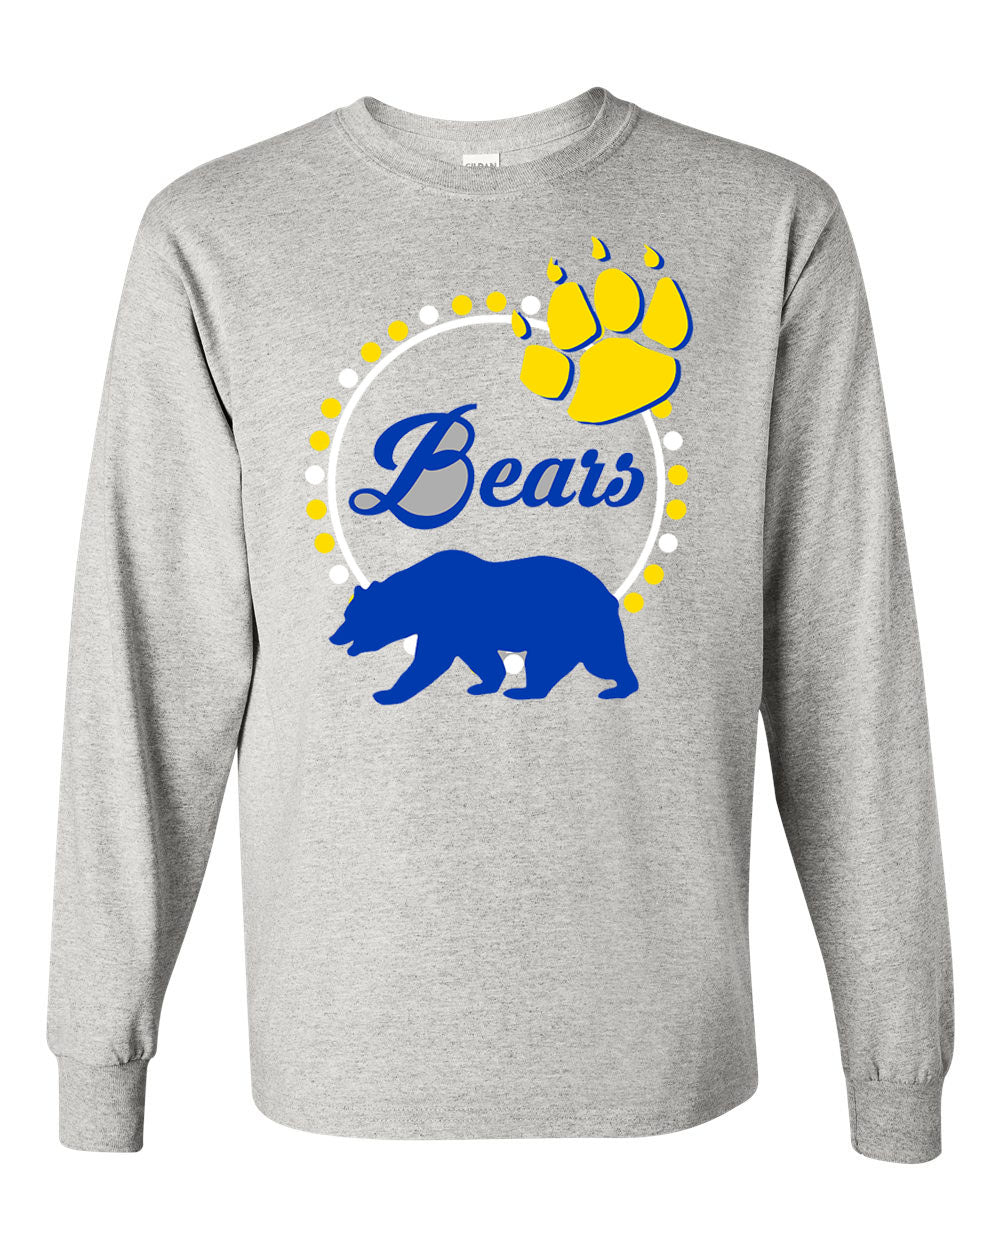 Bears design 9 Long Sleeve Shirt